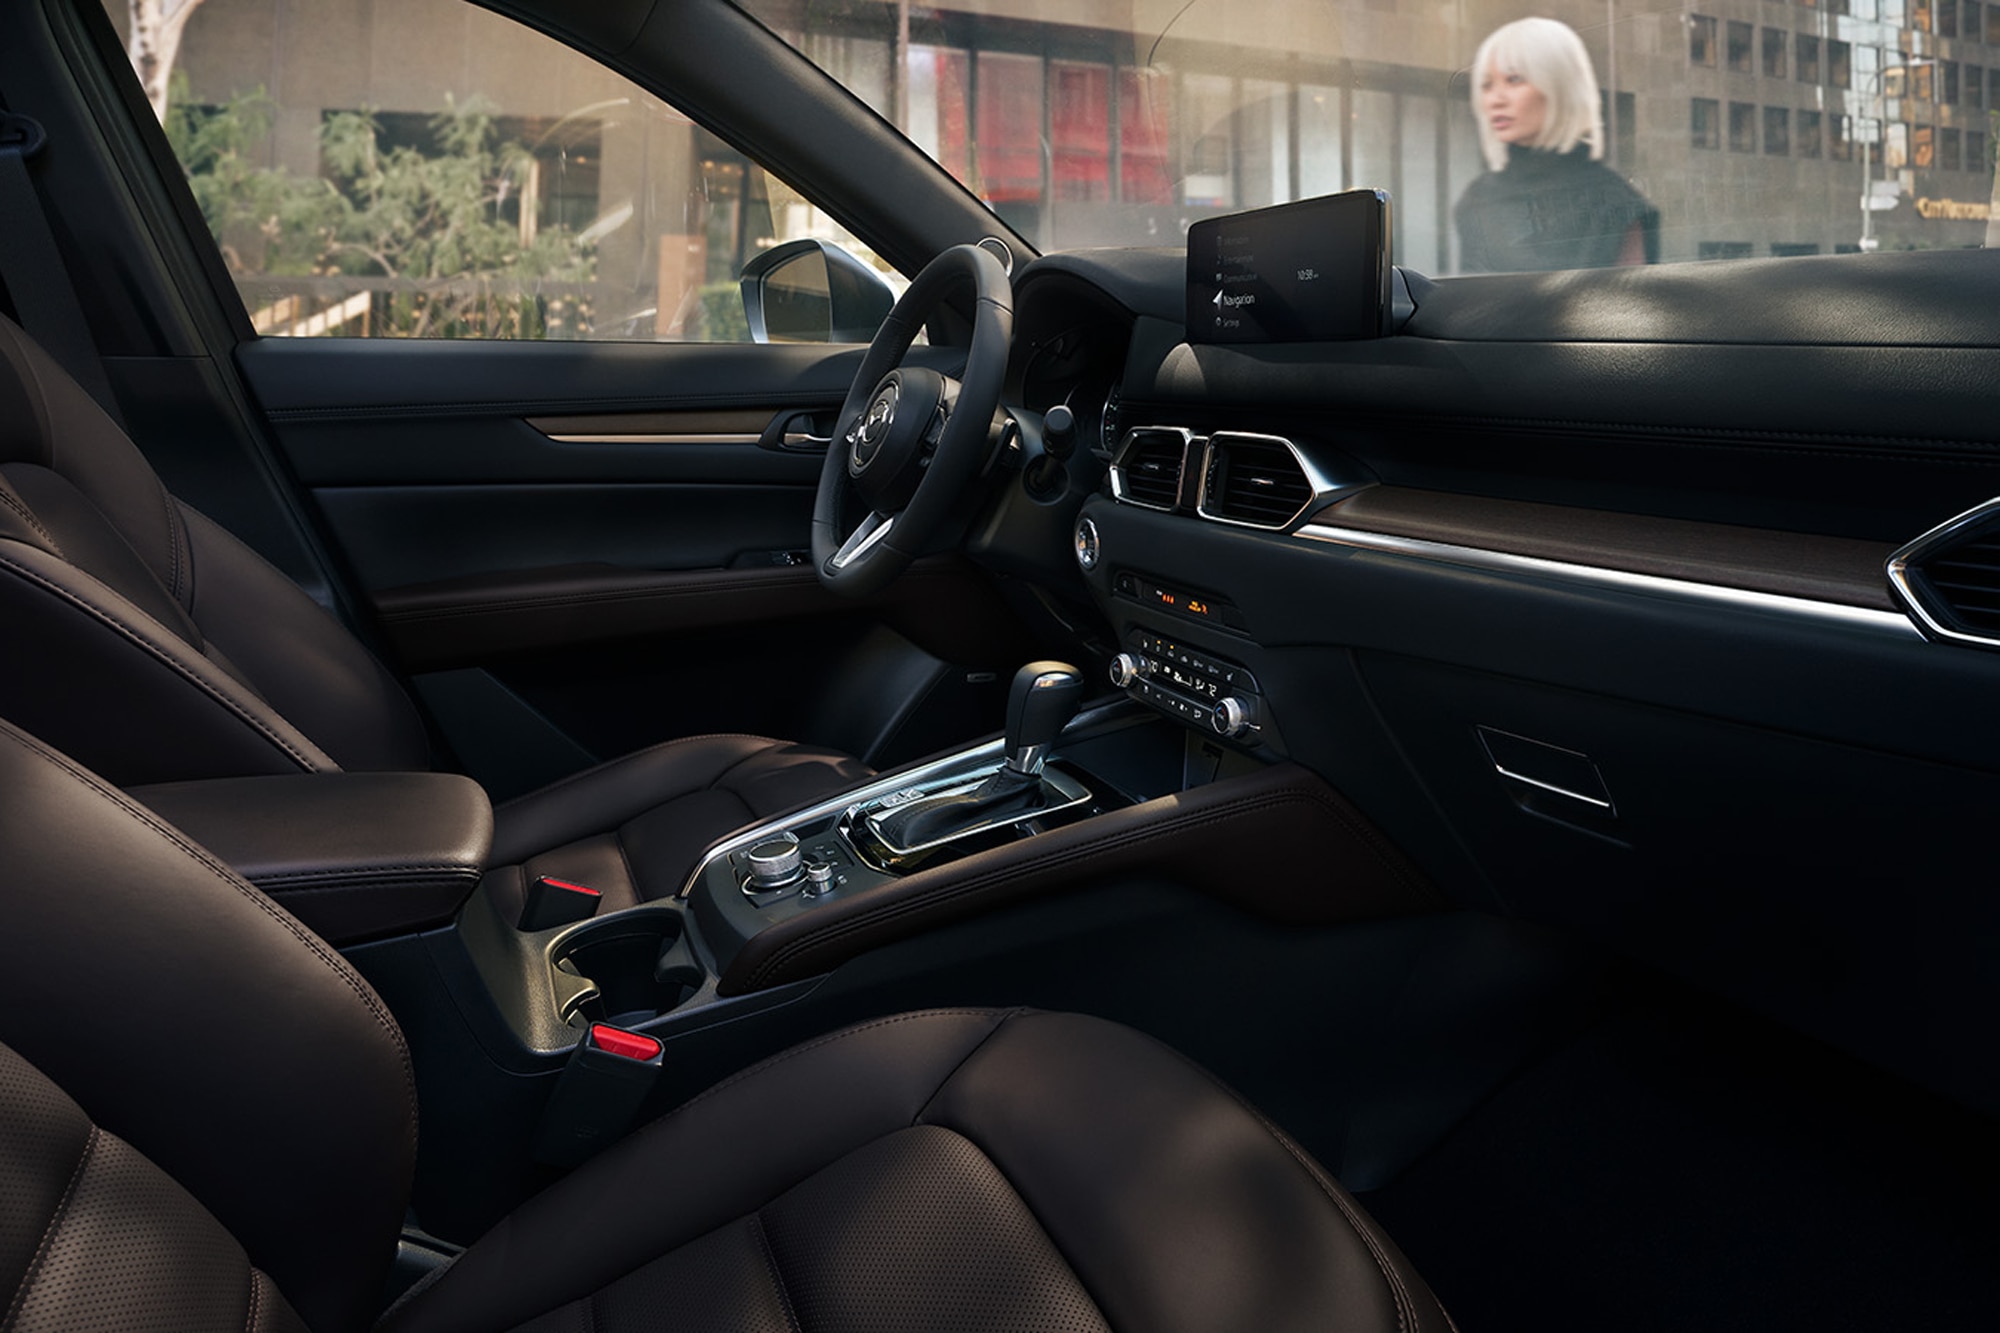 Mazda CX-5 interior with woman outside